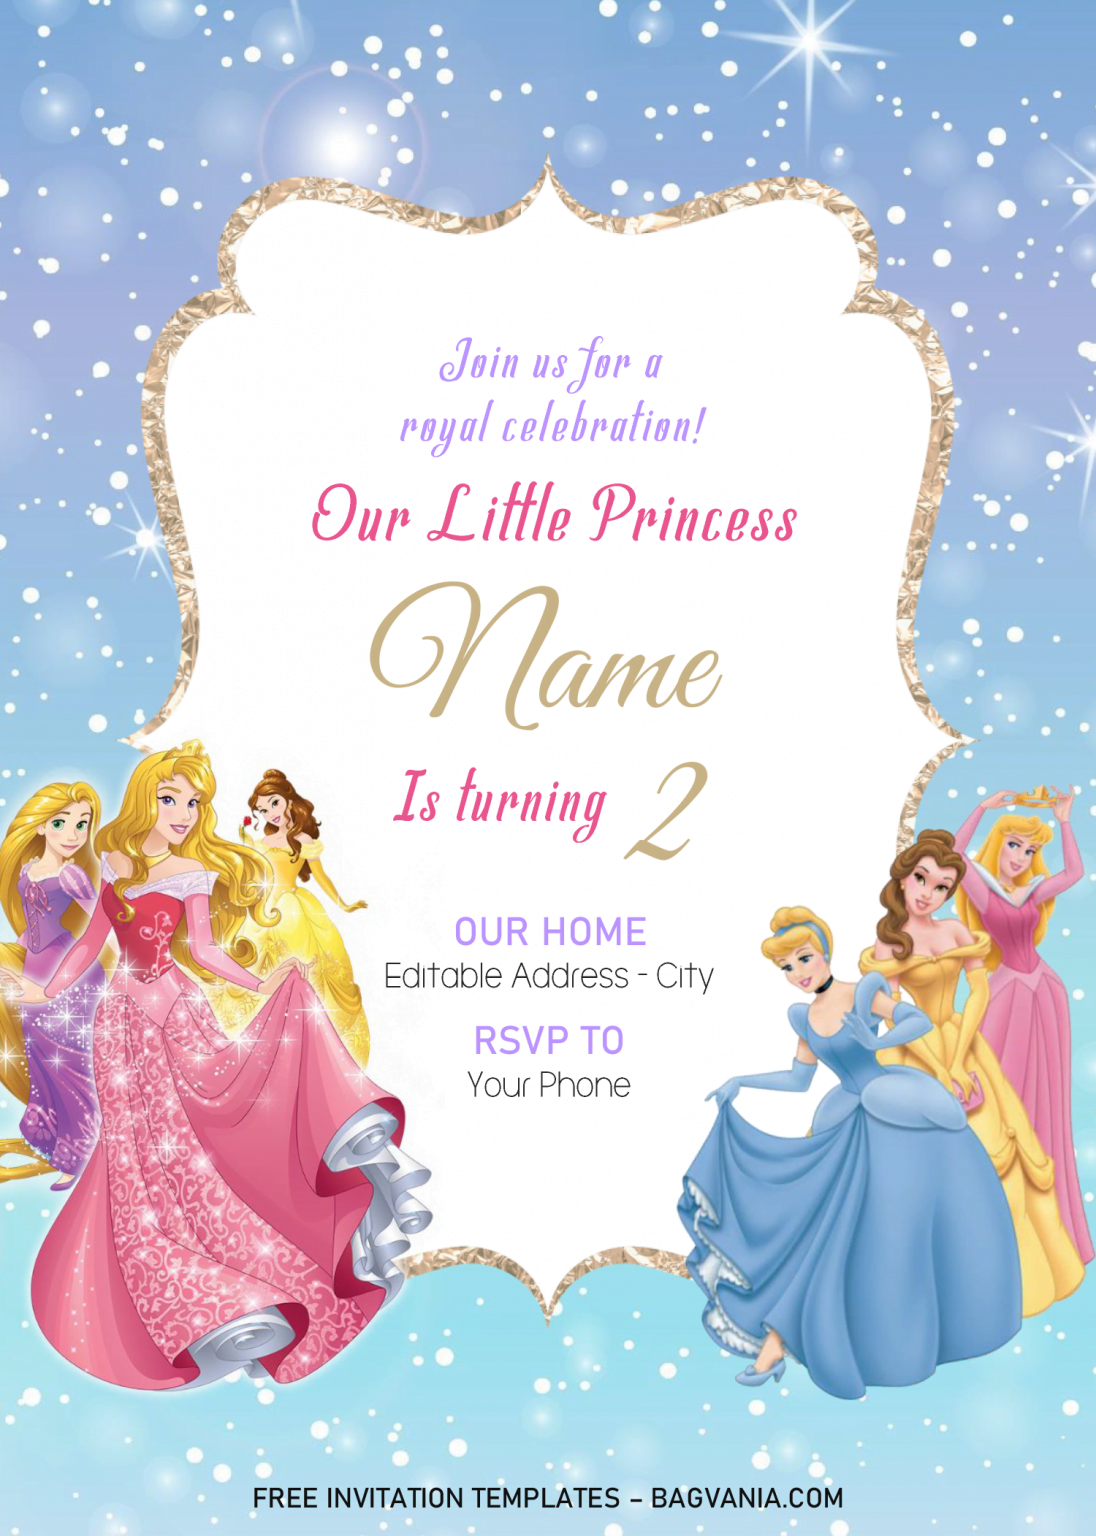 Princess Party Invitation Template Free